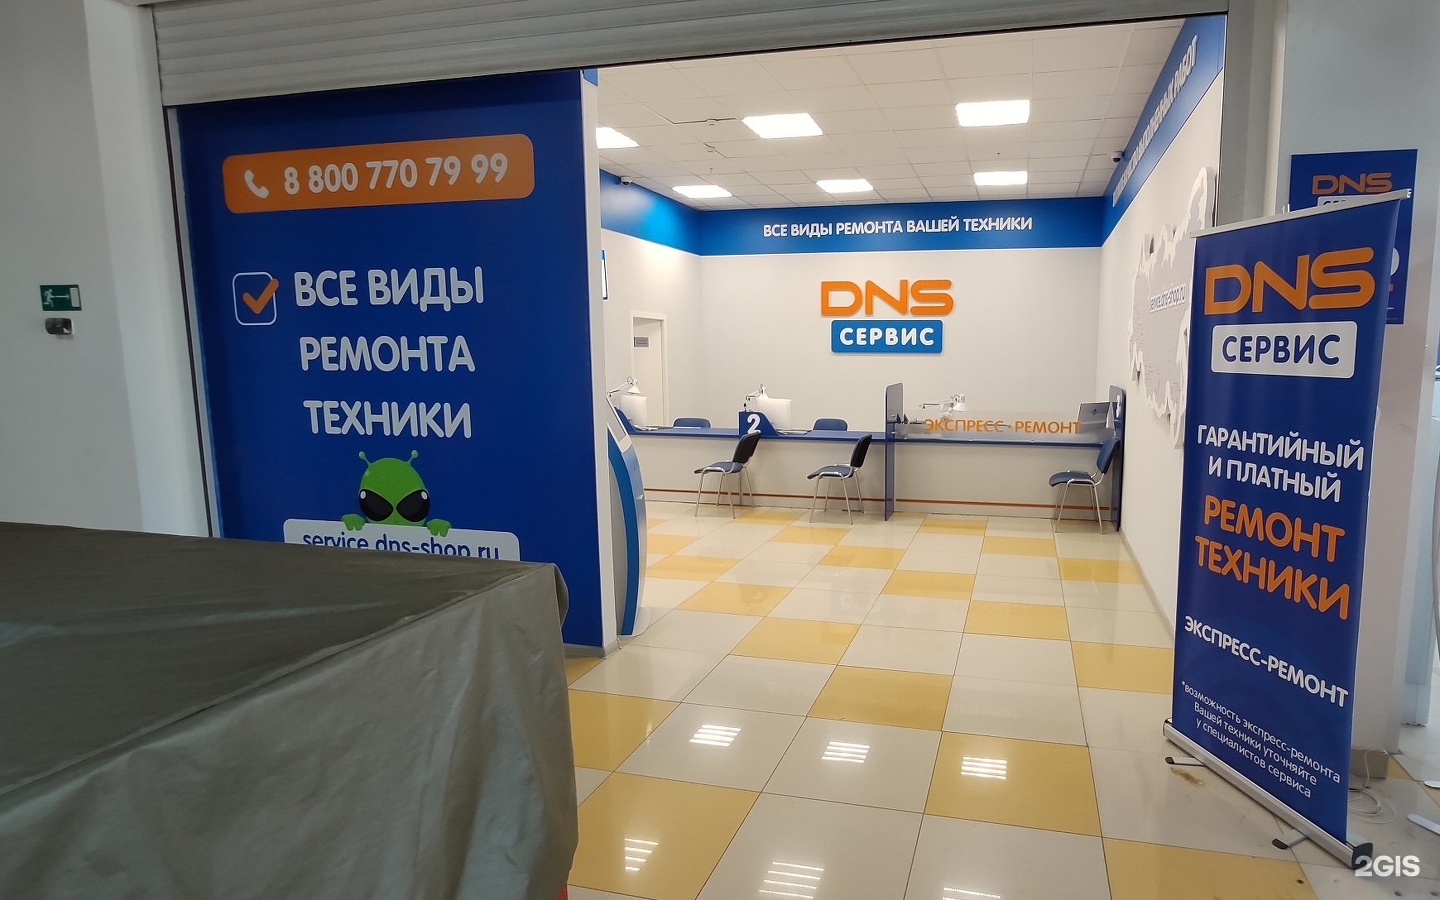 Dns service center status https